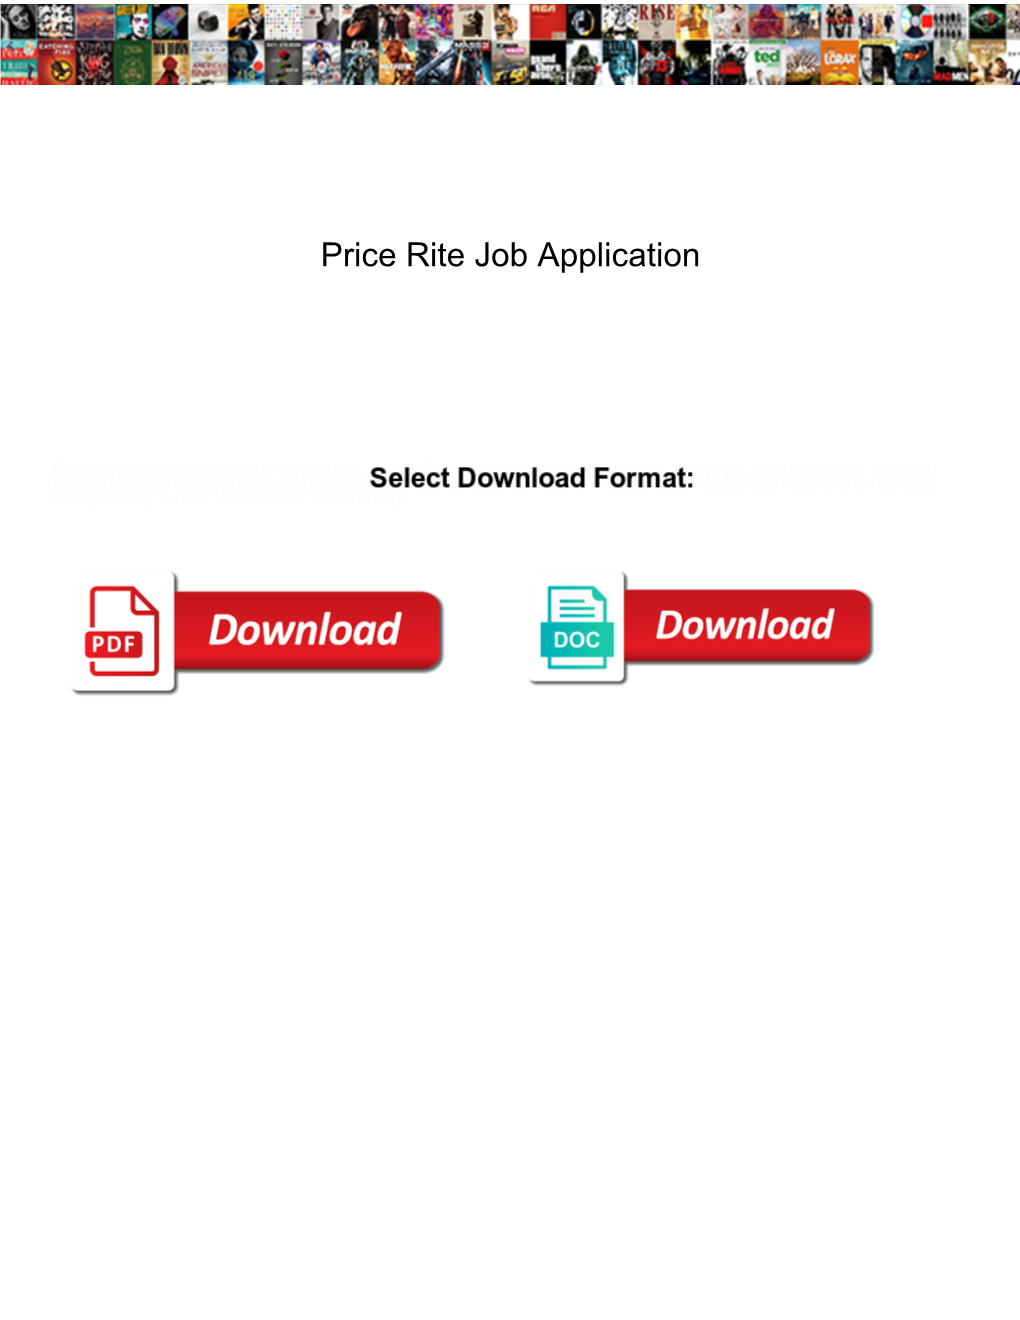 Price Rite Job Application